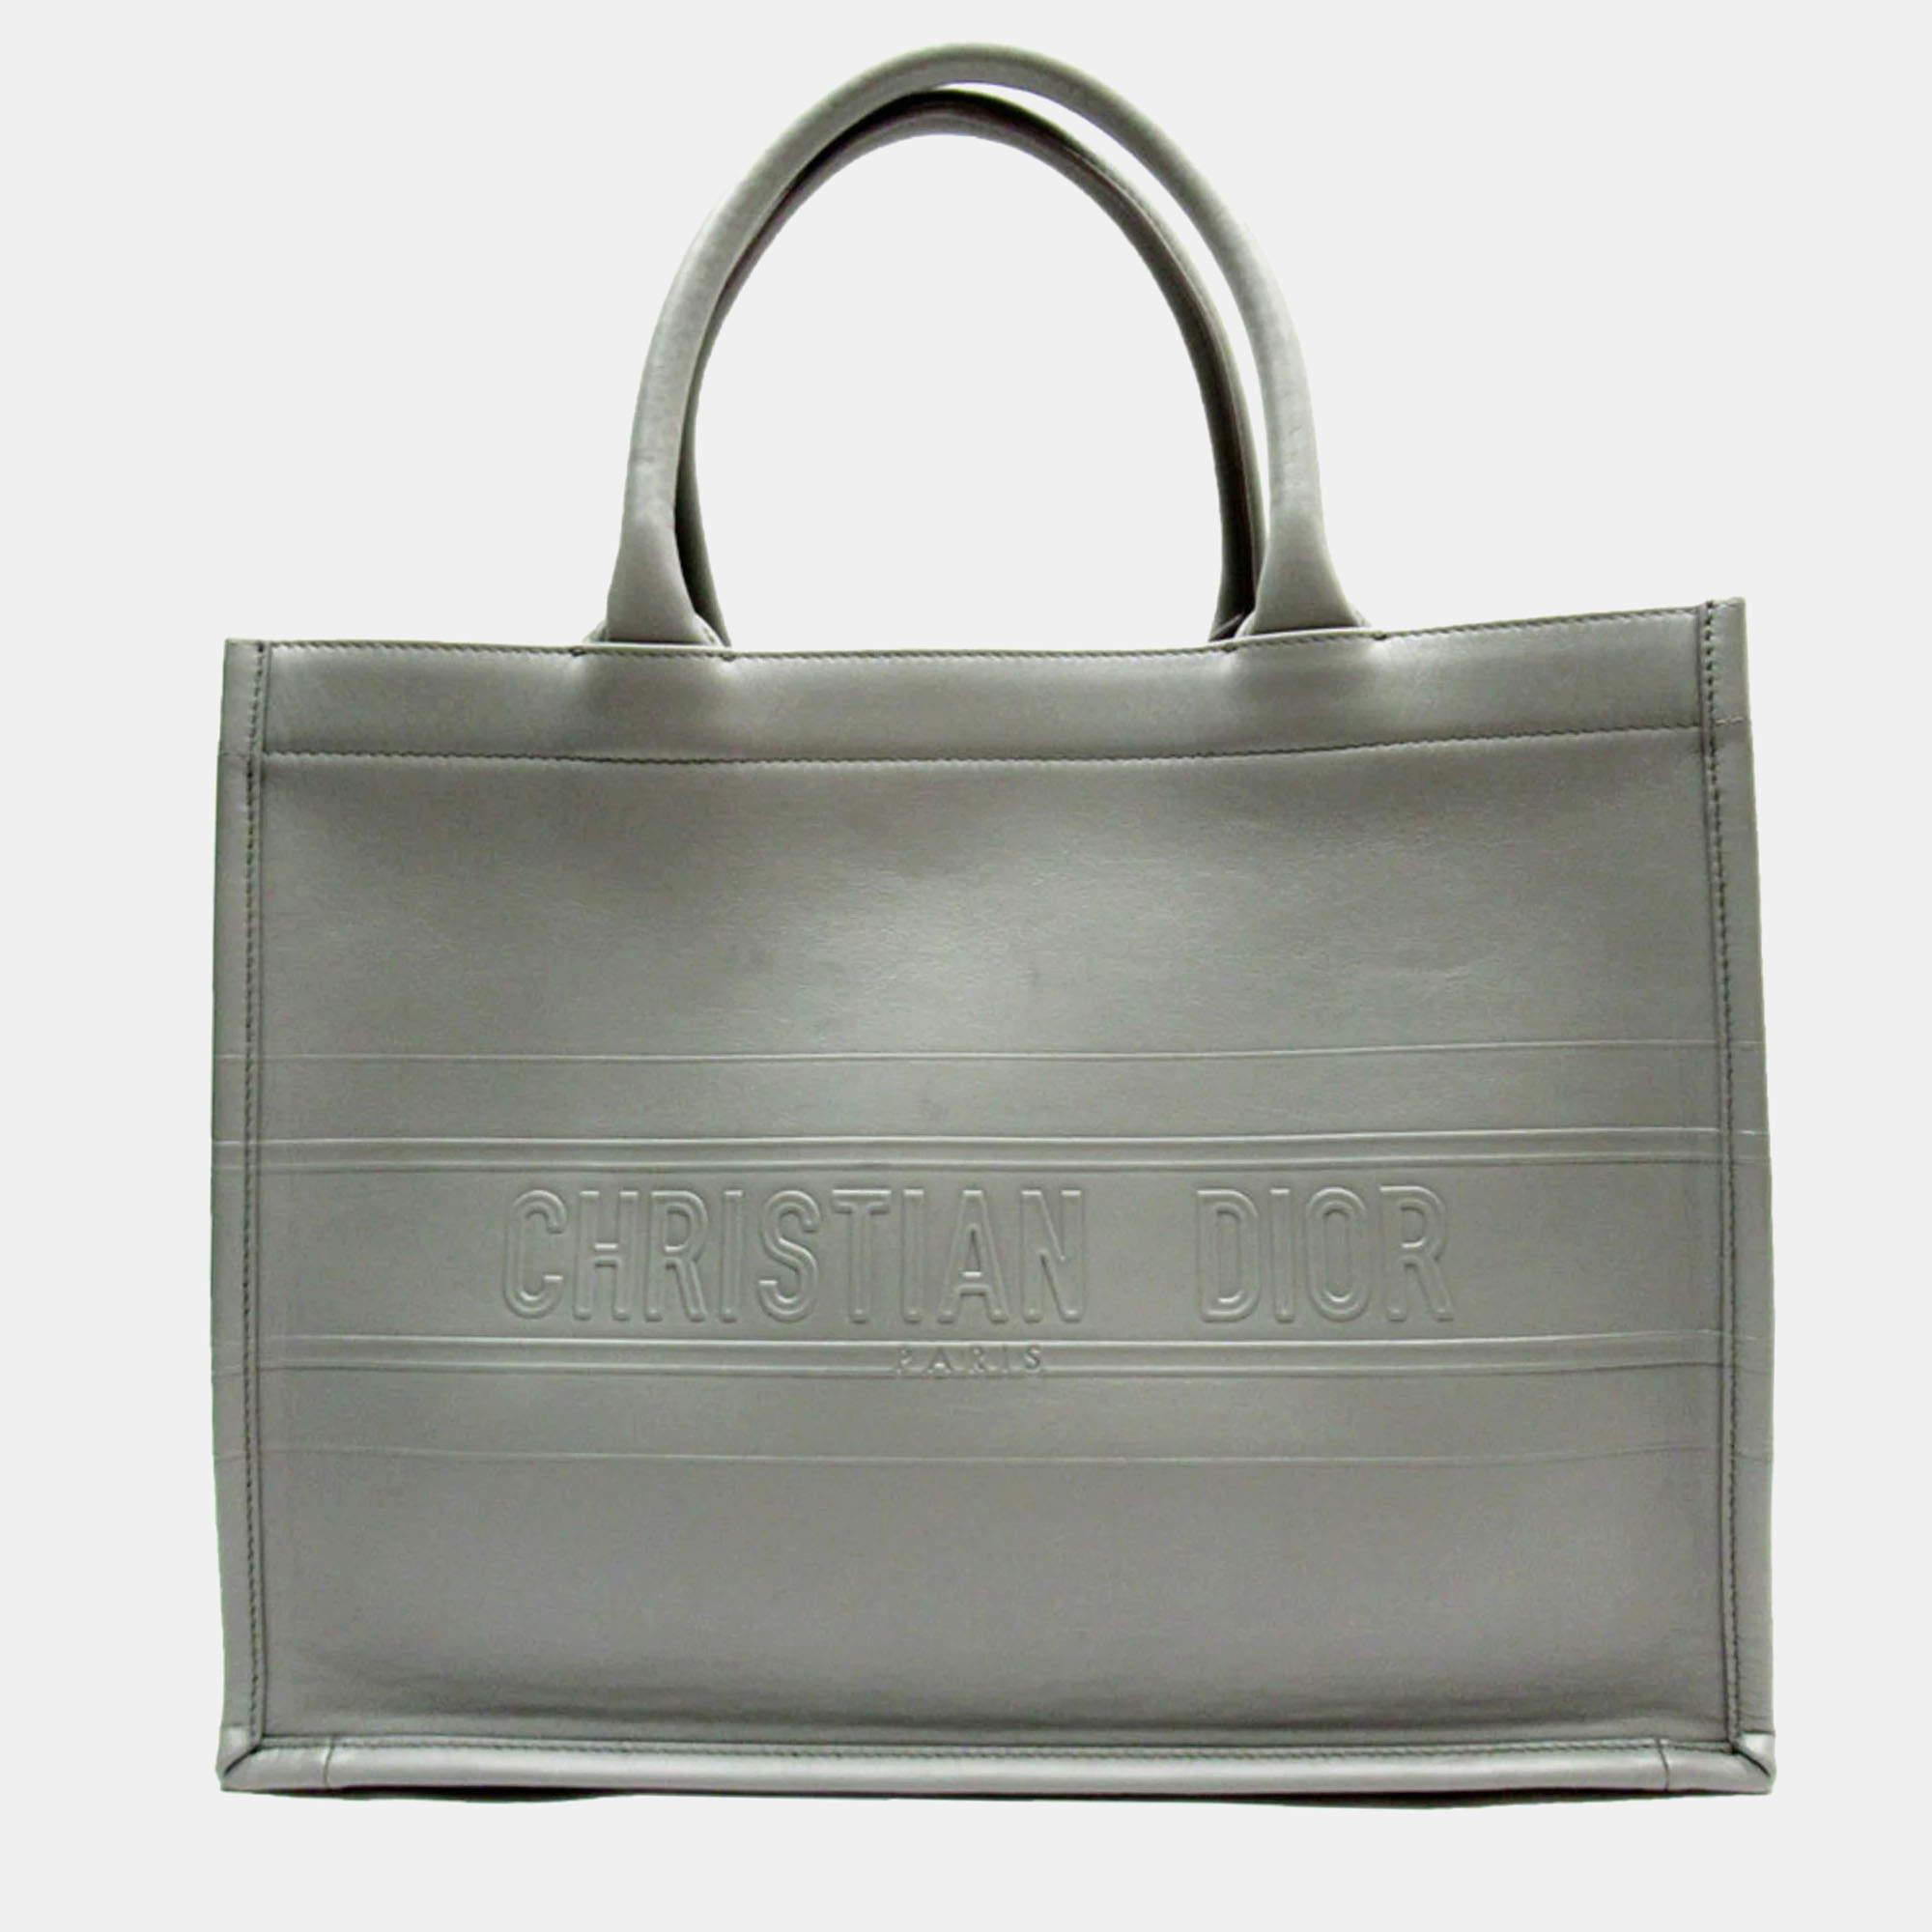 Dior grey leather small book tote tote bag